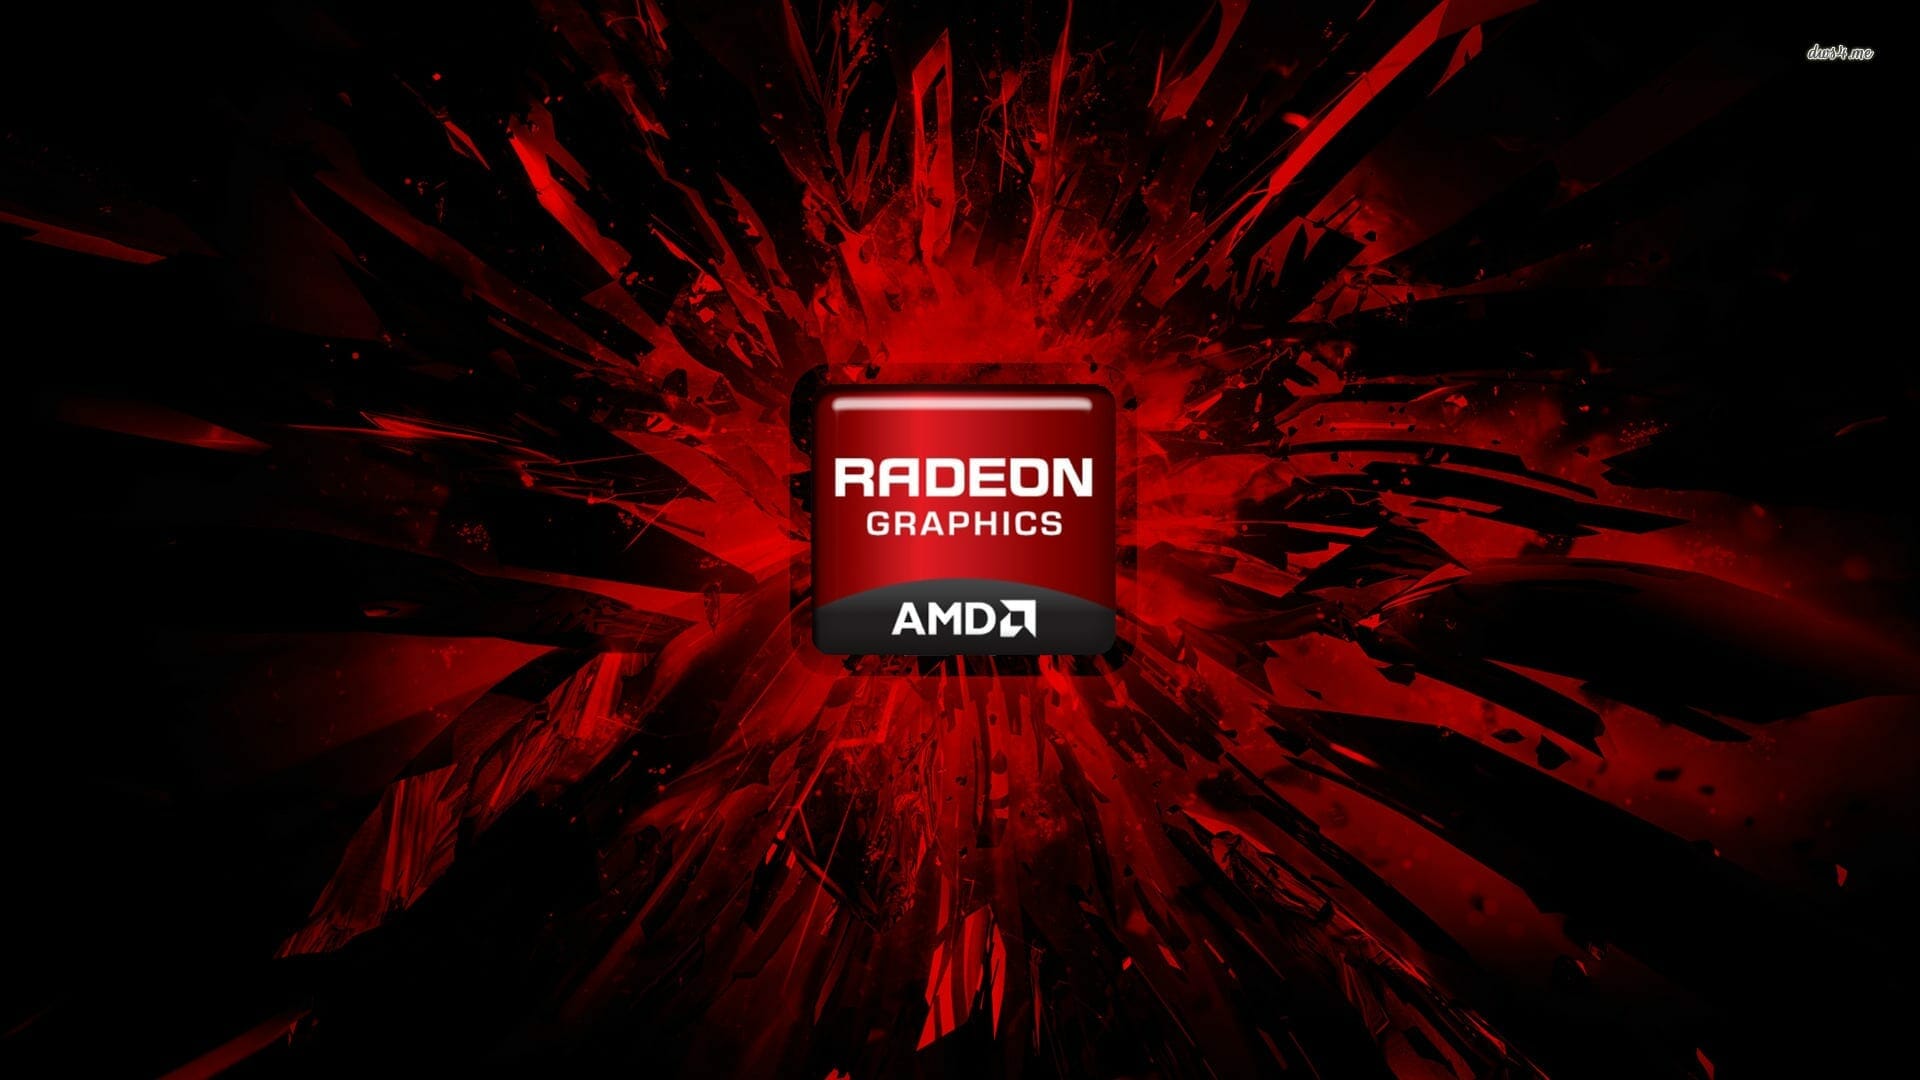 Radeon Software Adrenalin 2019 Edition 19.1.1